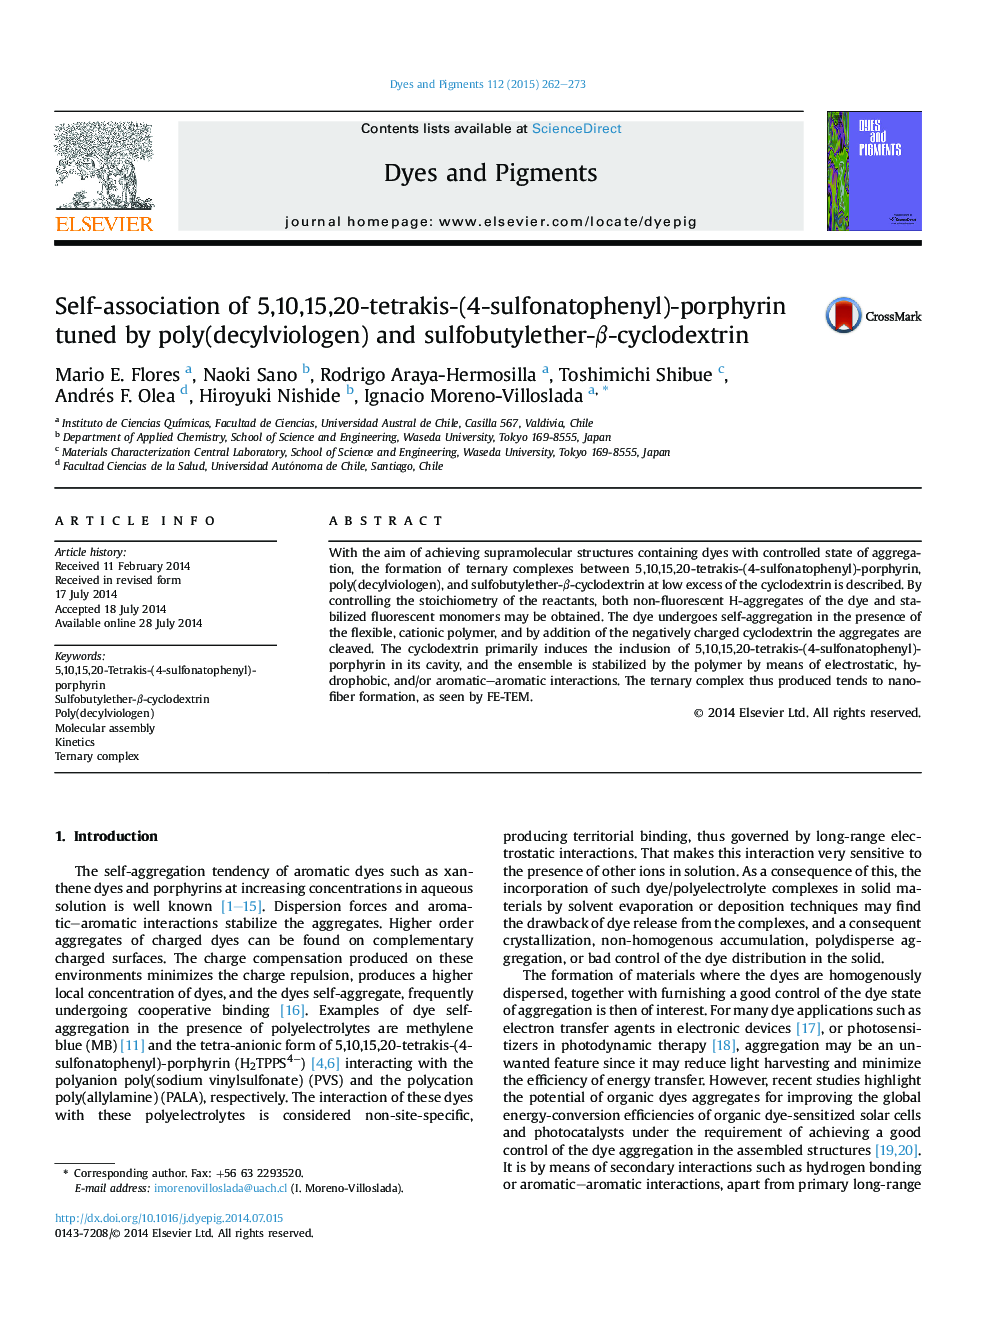 Self-association of 5,10,15,20-tetrakis-(4-sulfonatophenyl)-porphyrin tuned by poly(decylviologen) and sulfobutylether-β-cyclodextrin